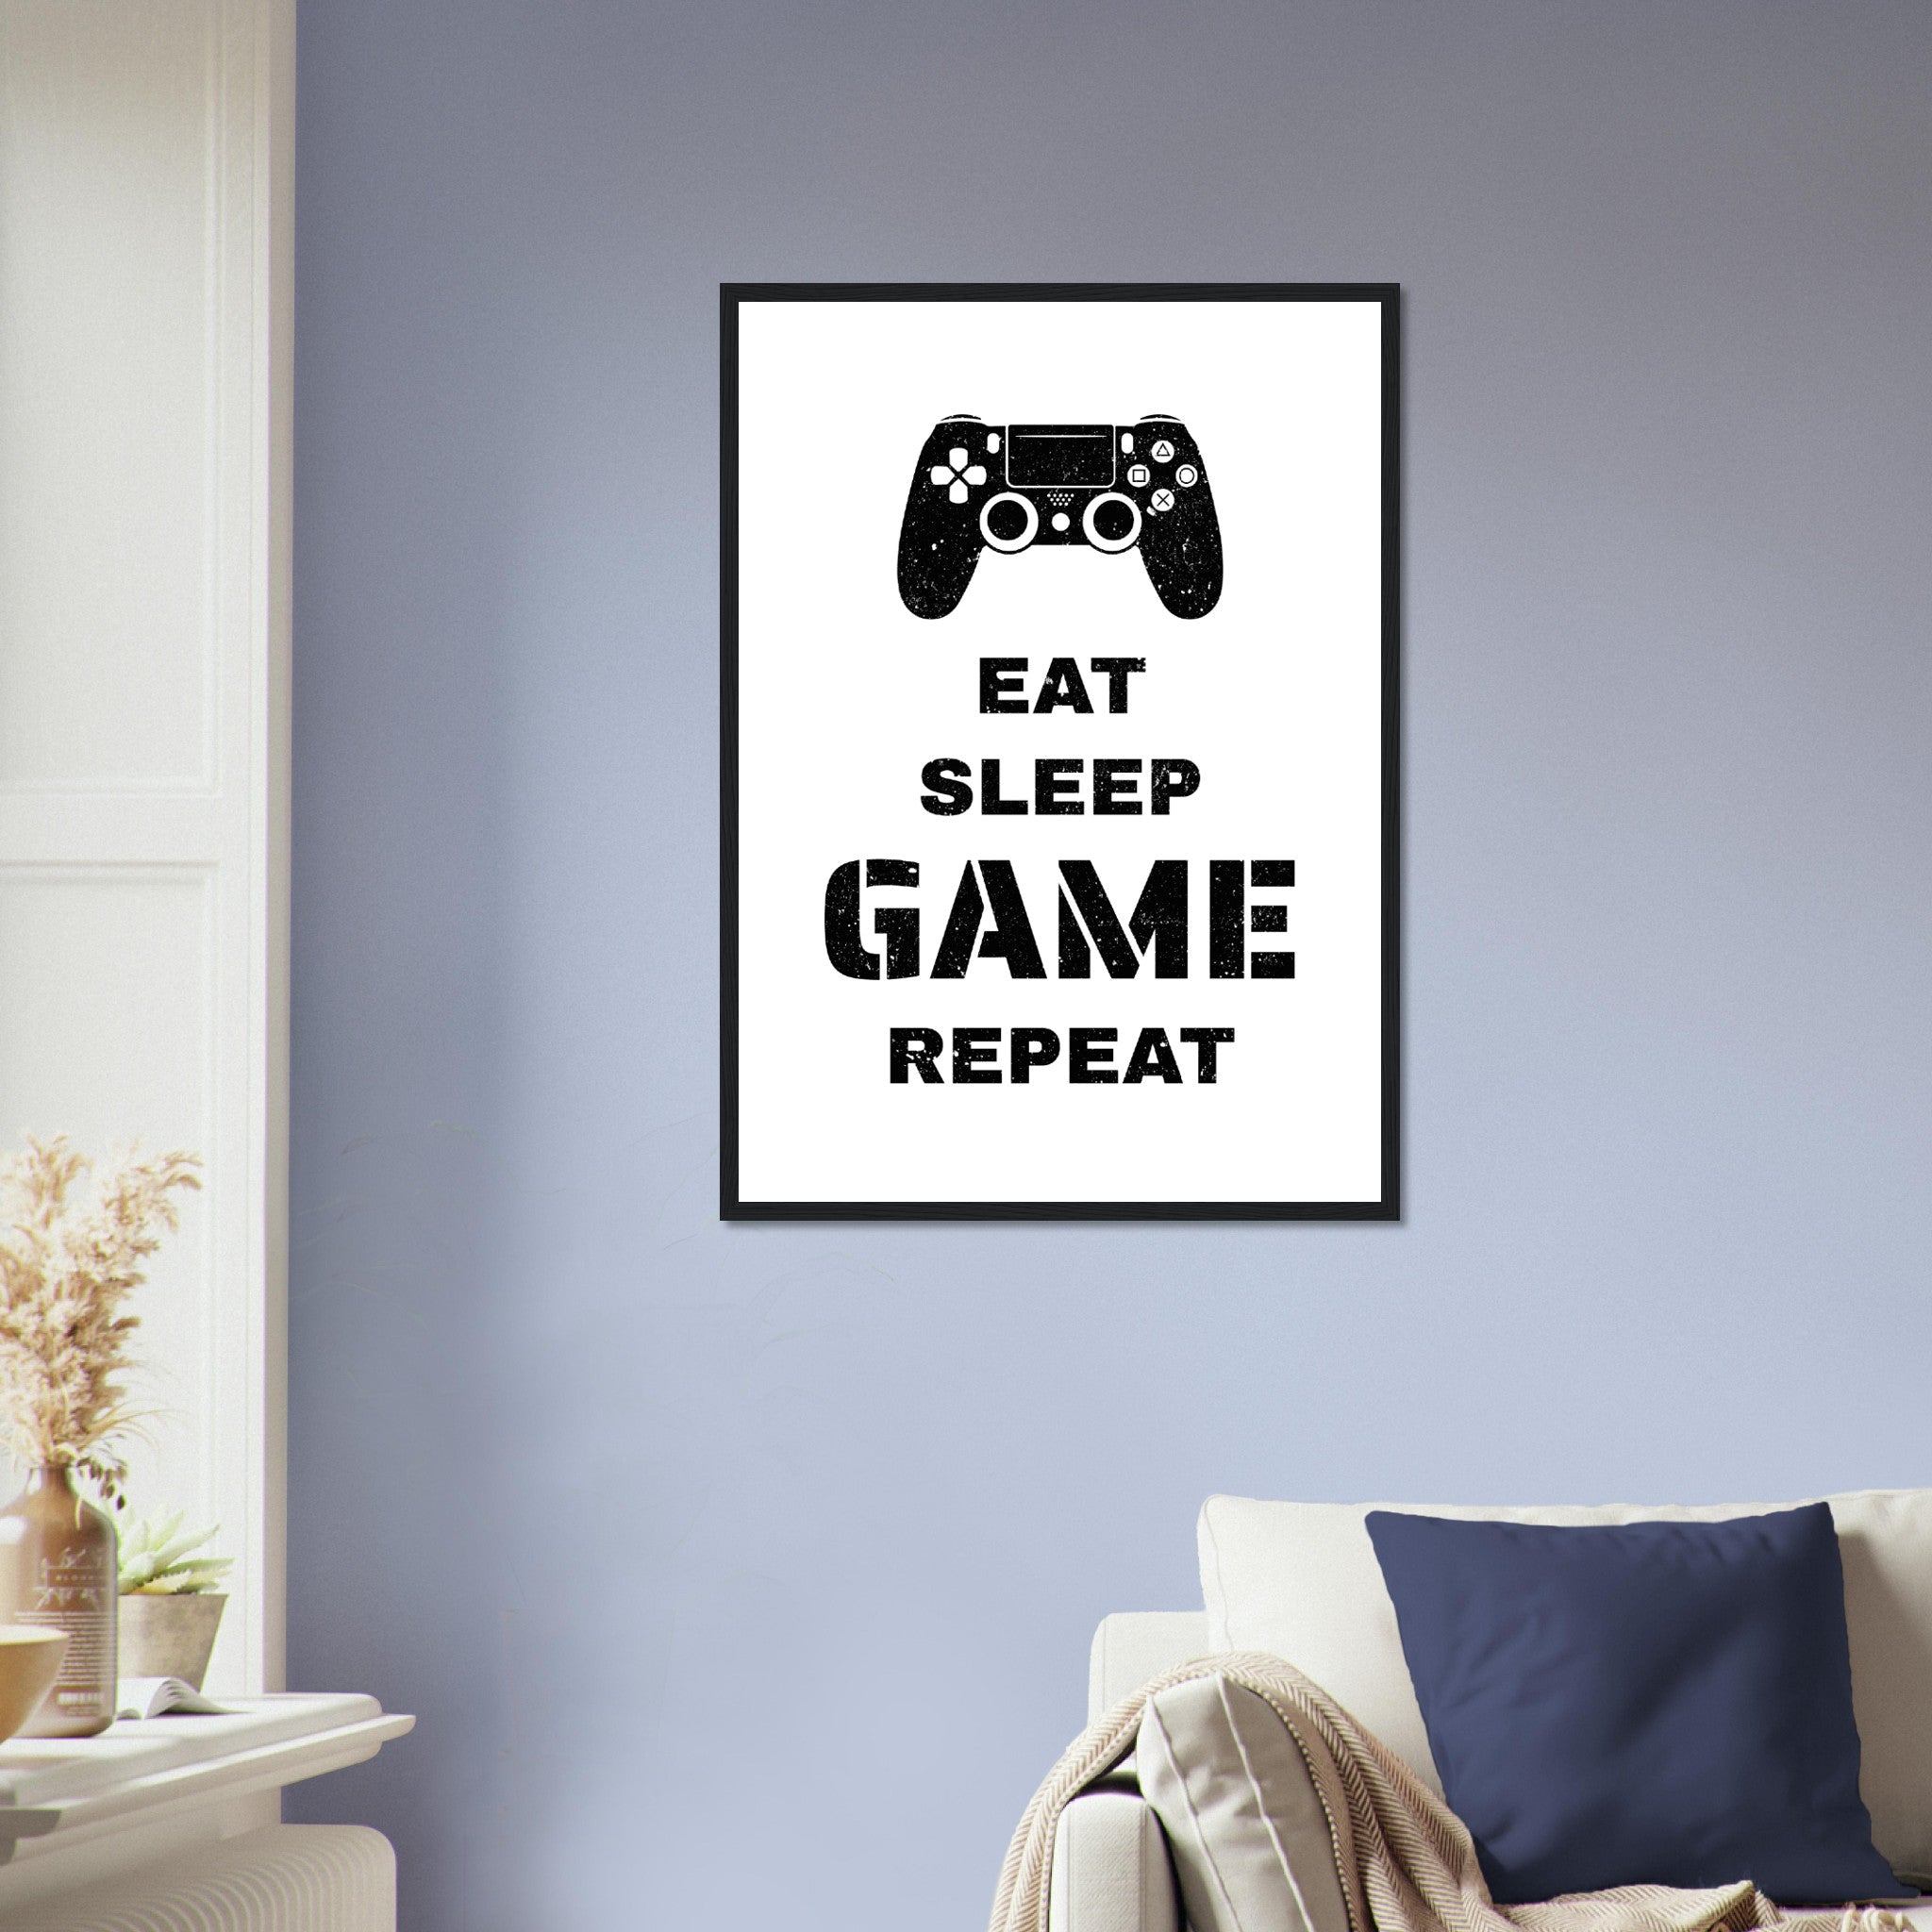 Eat Sleep Game Repeat Black Poster